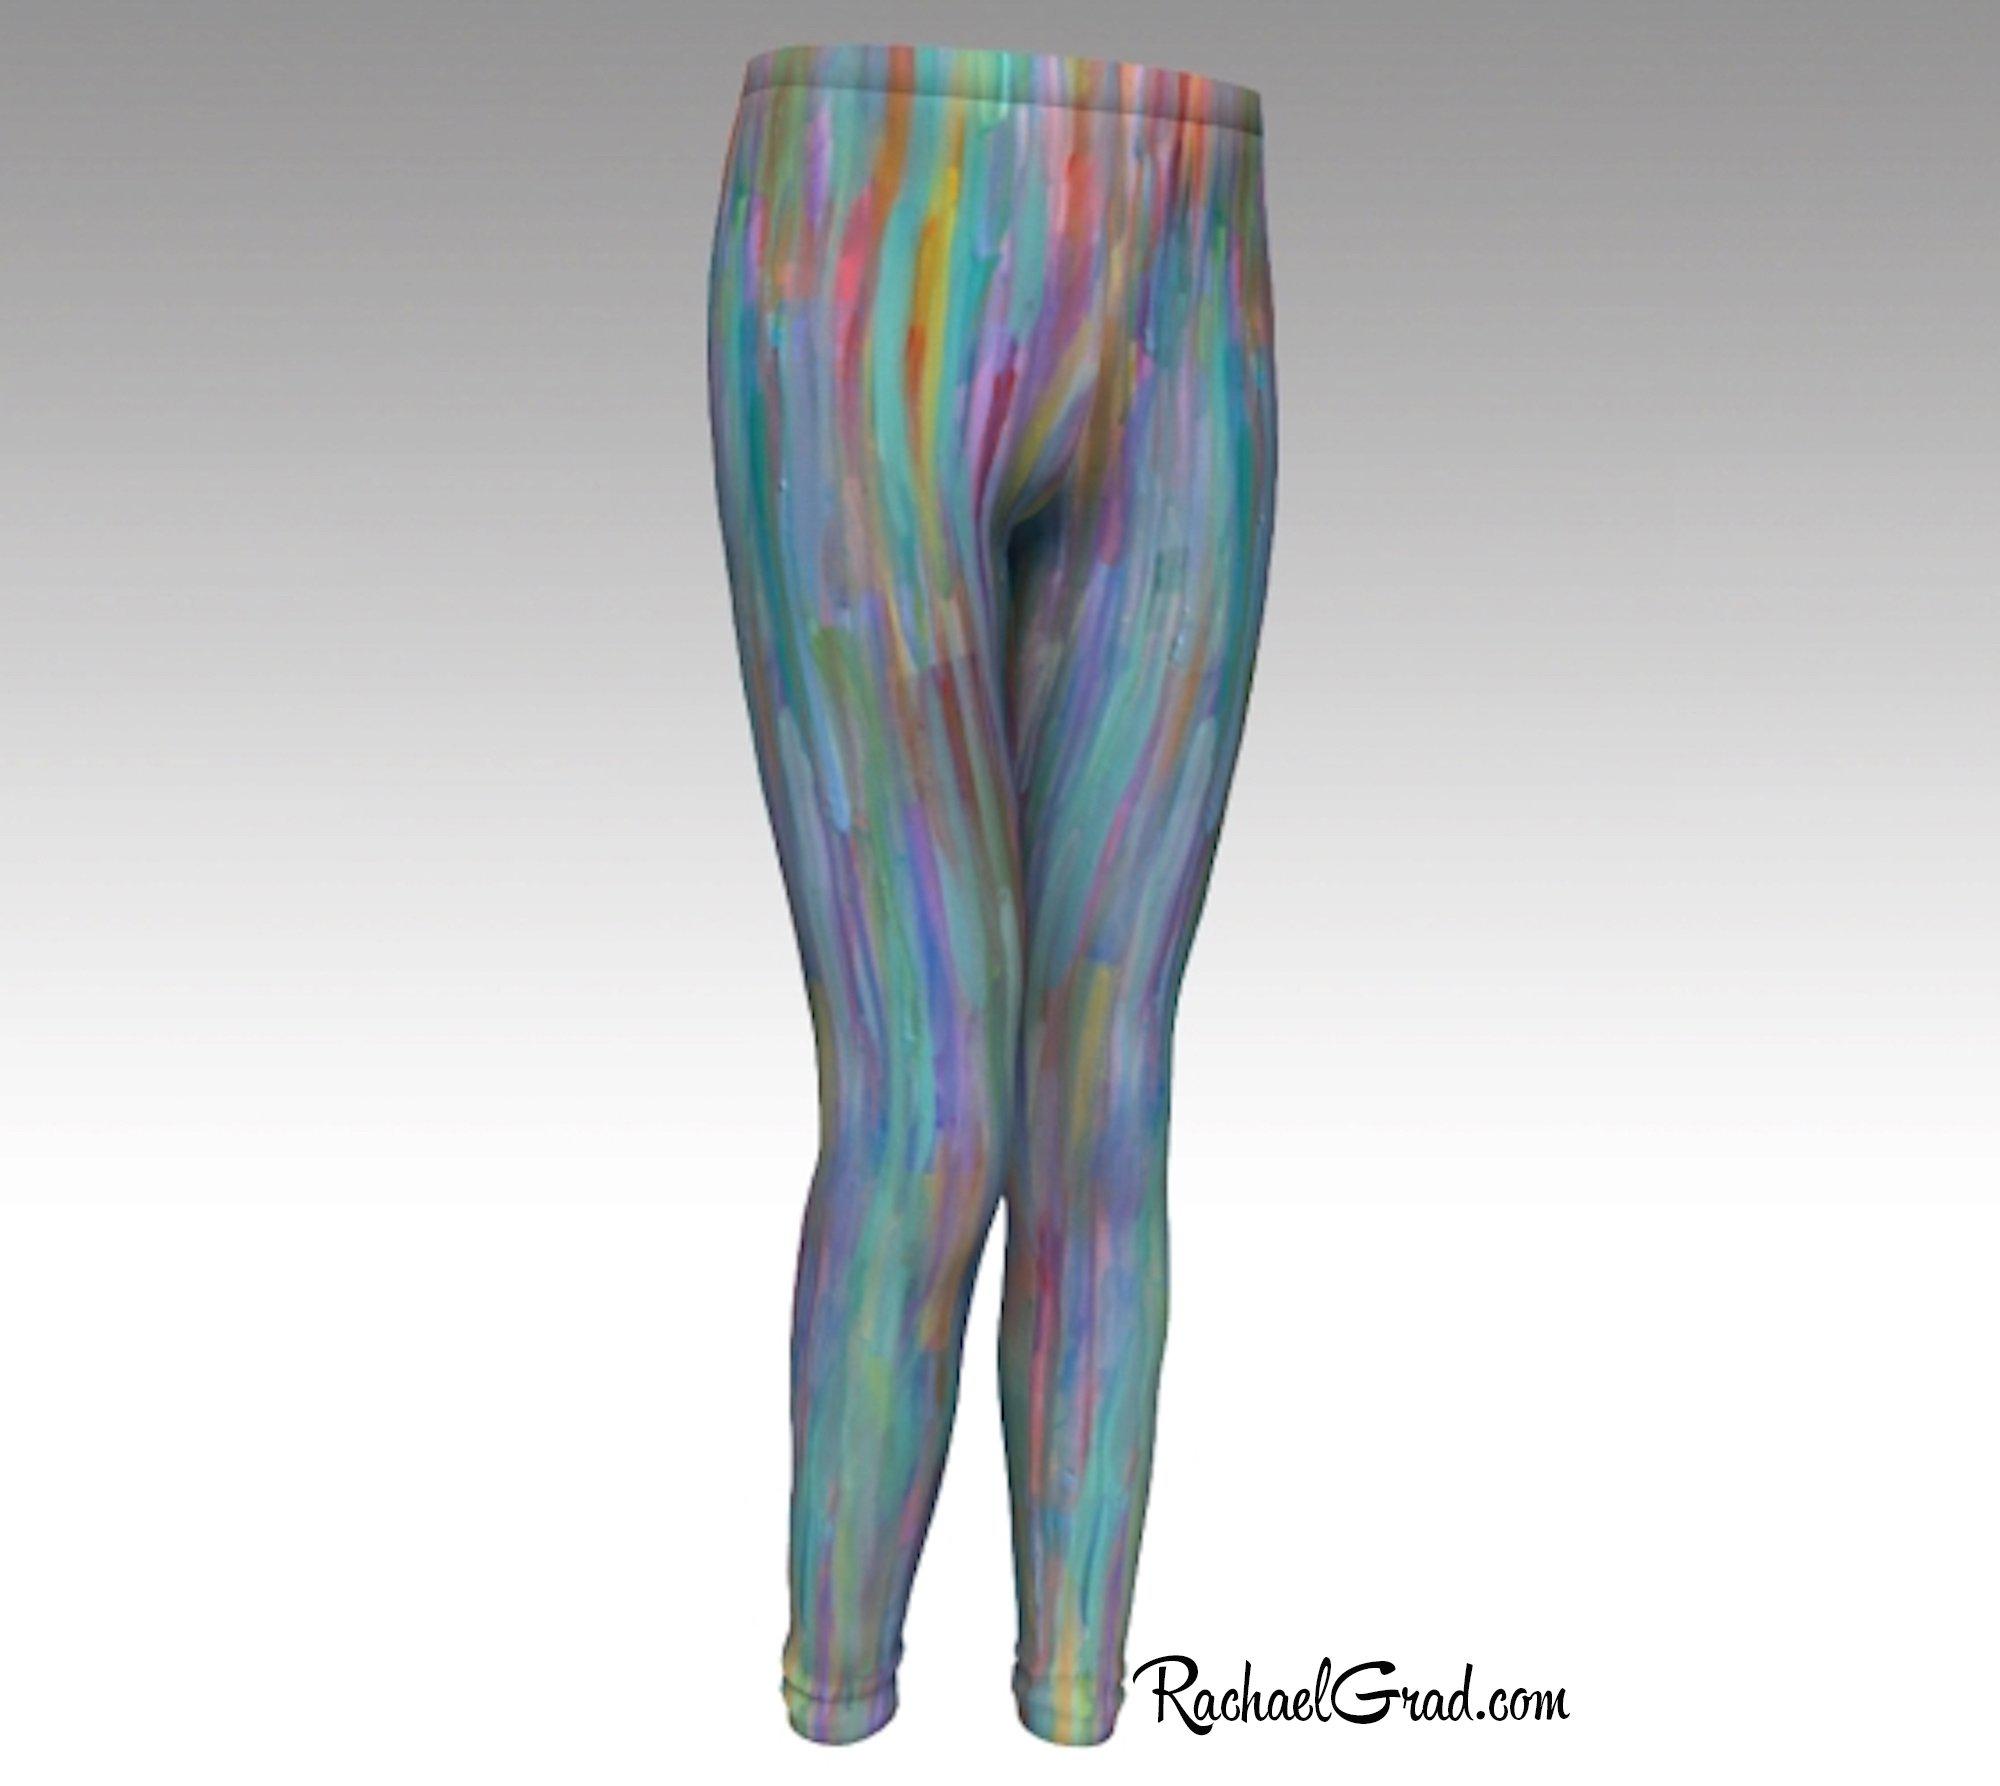 Women's Yoga Leggings with Rainbow Stripes Art by Artist Rachael Grad